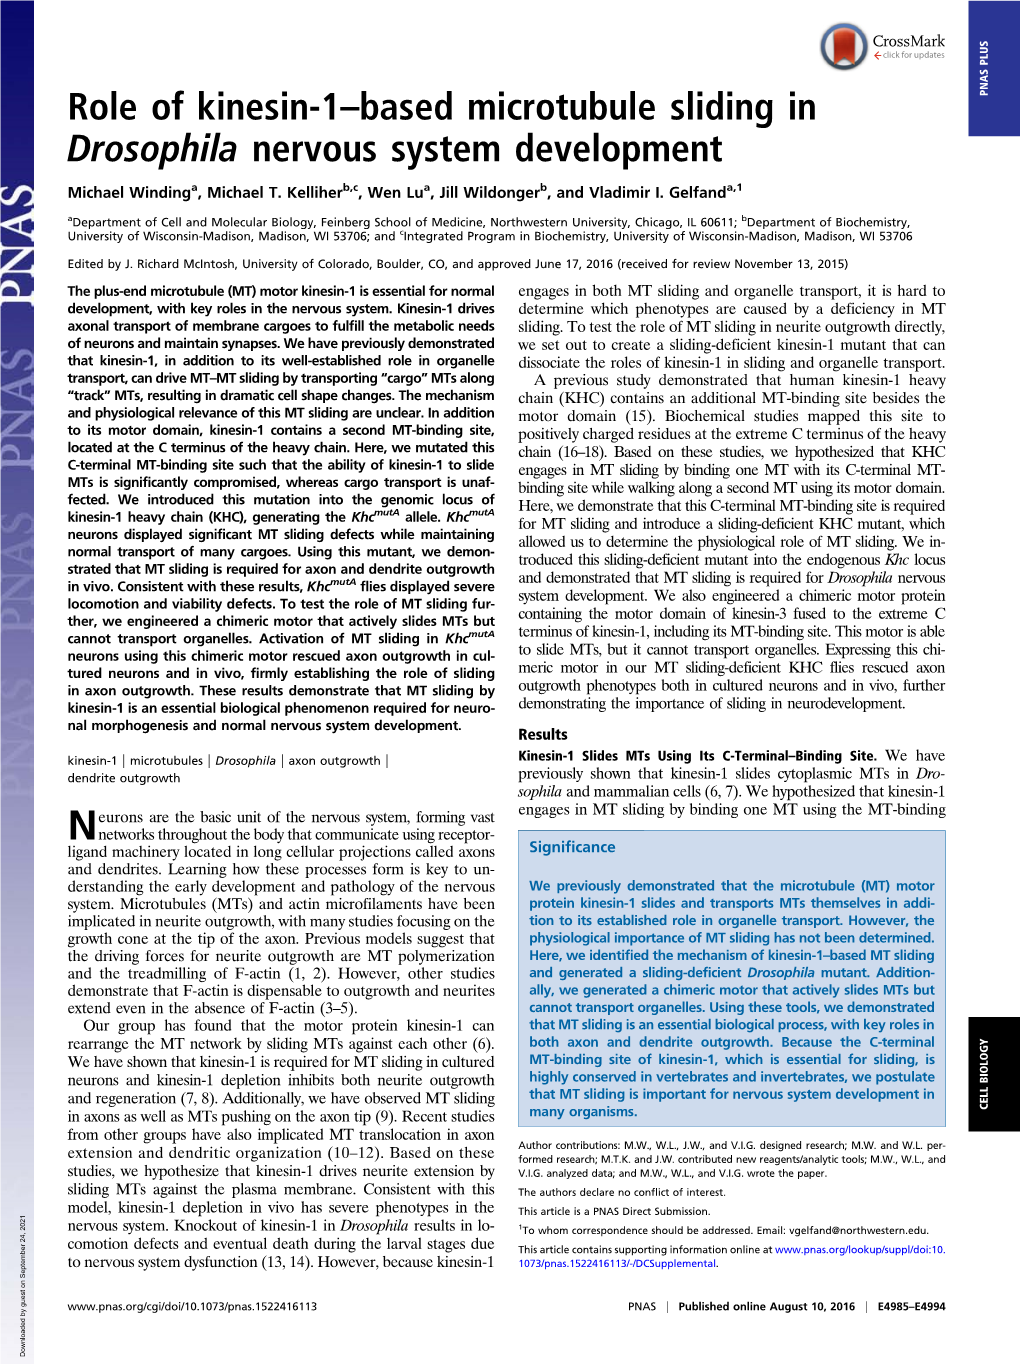 Role of Kinesin-1–Based Microtubule Sliding in Drosophila Nervous System Development